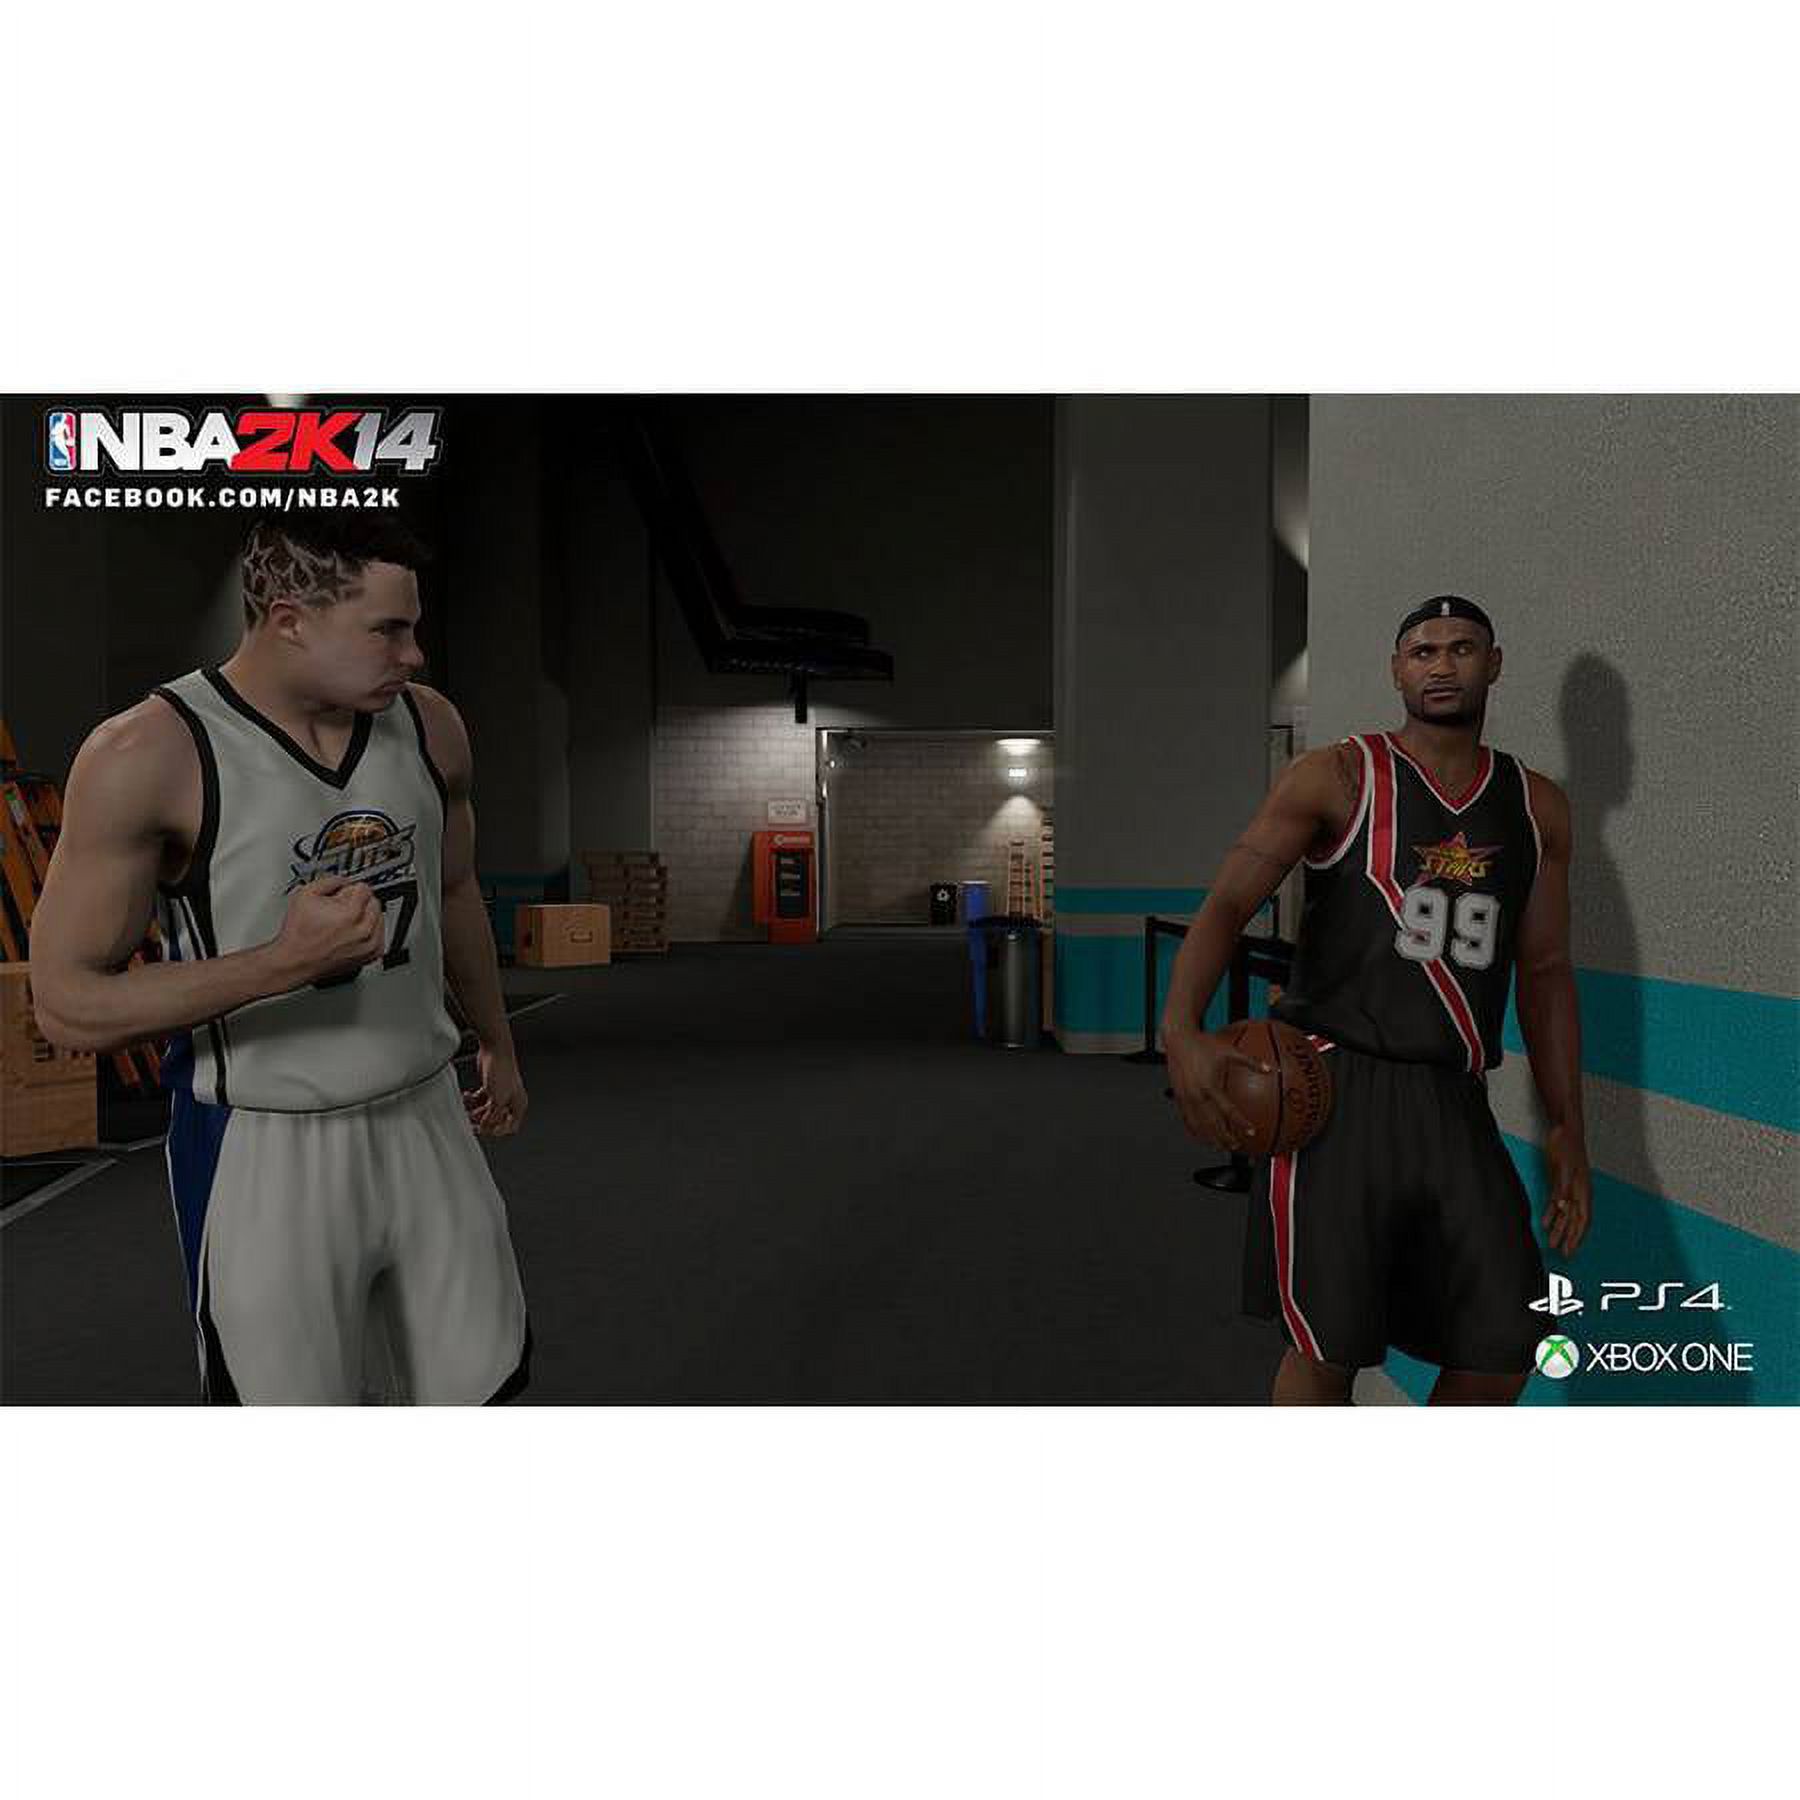 NBA 2K14, 2K, Xbox One, 710425493072 - image 2 of 6